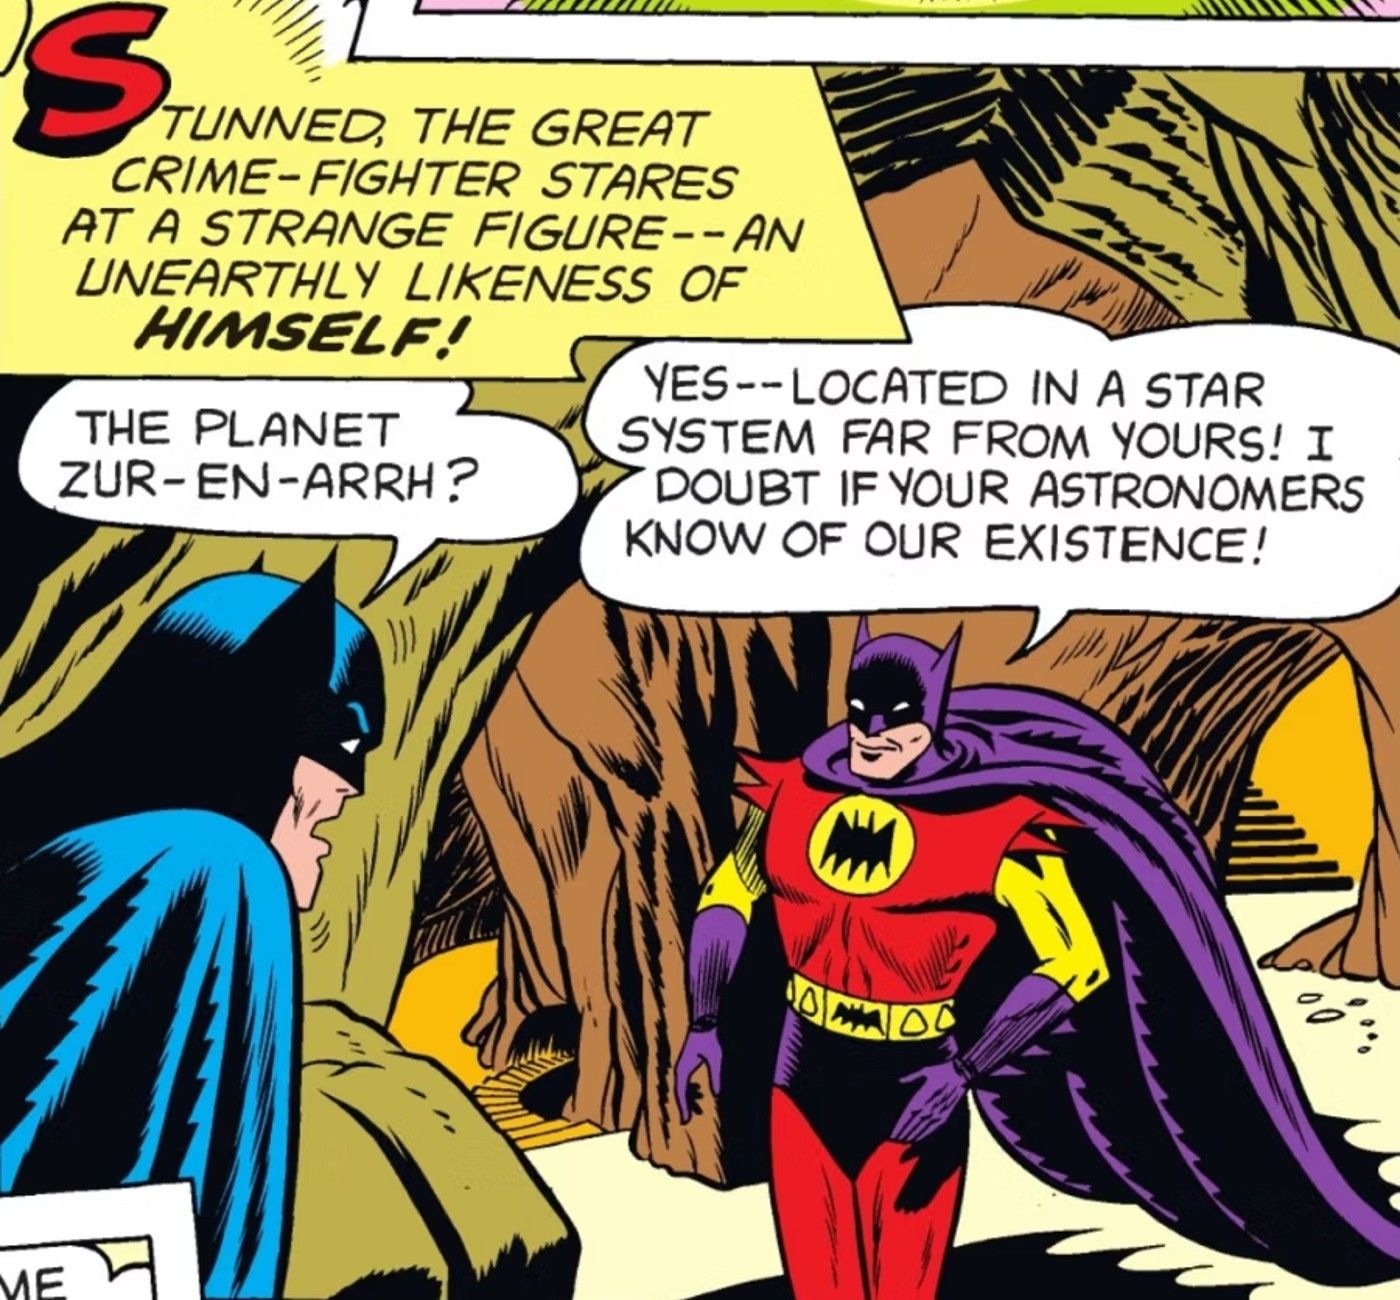 “Batcave of Zur-En-Arrh”: Batman’s Wild Alternate Persona Gets His Own Batcave in Surreal Fanart